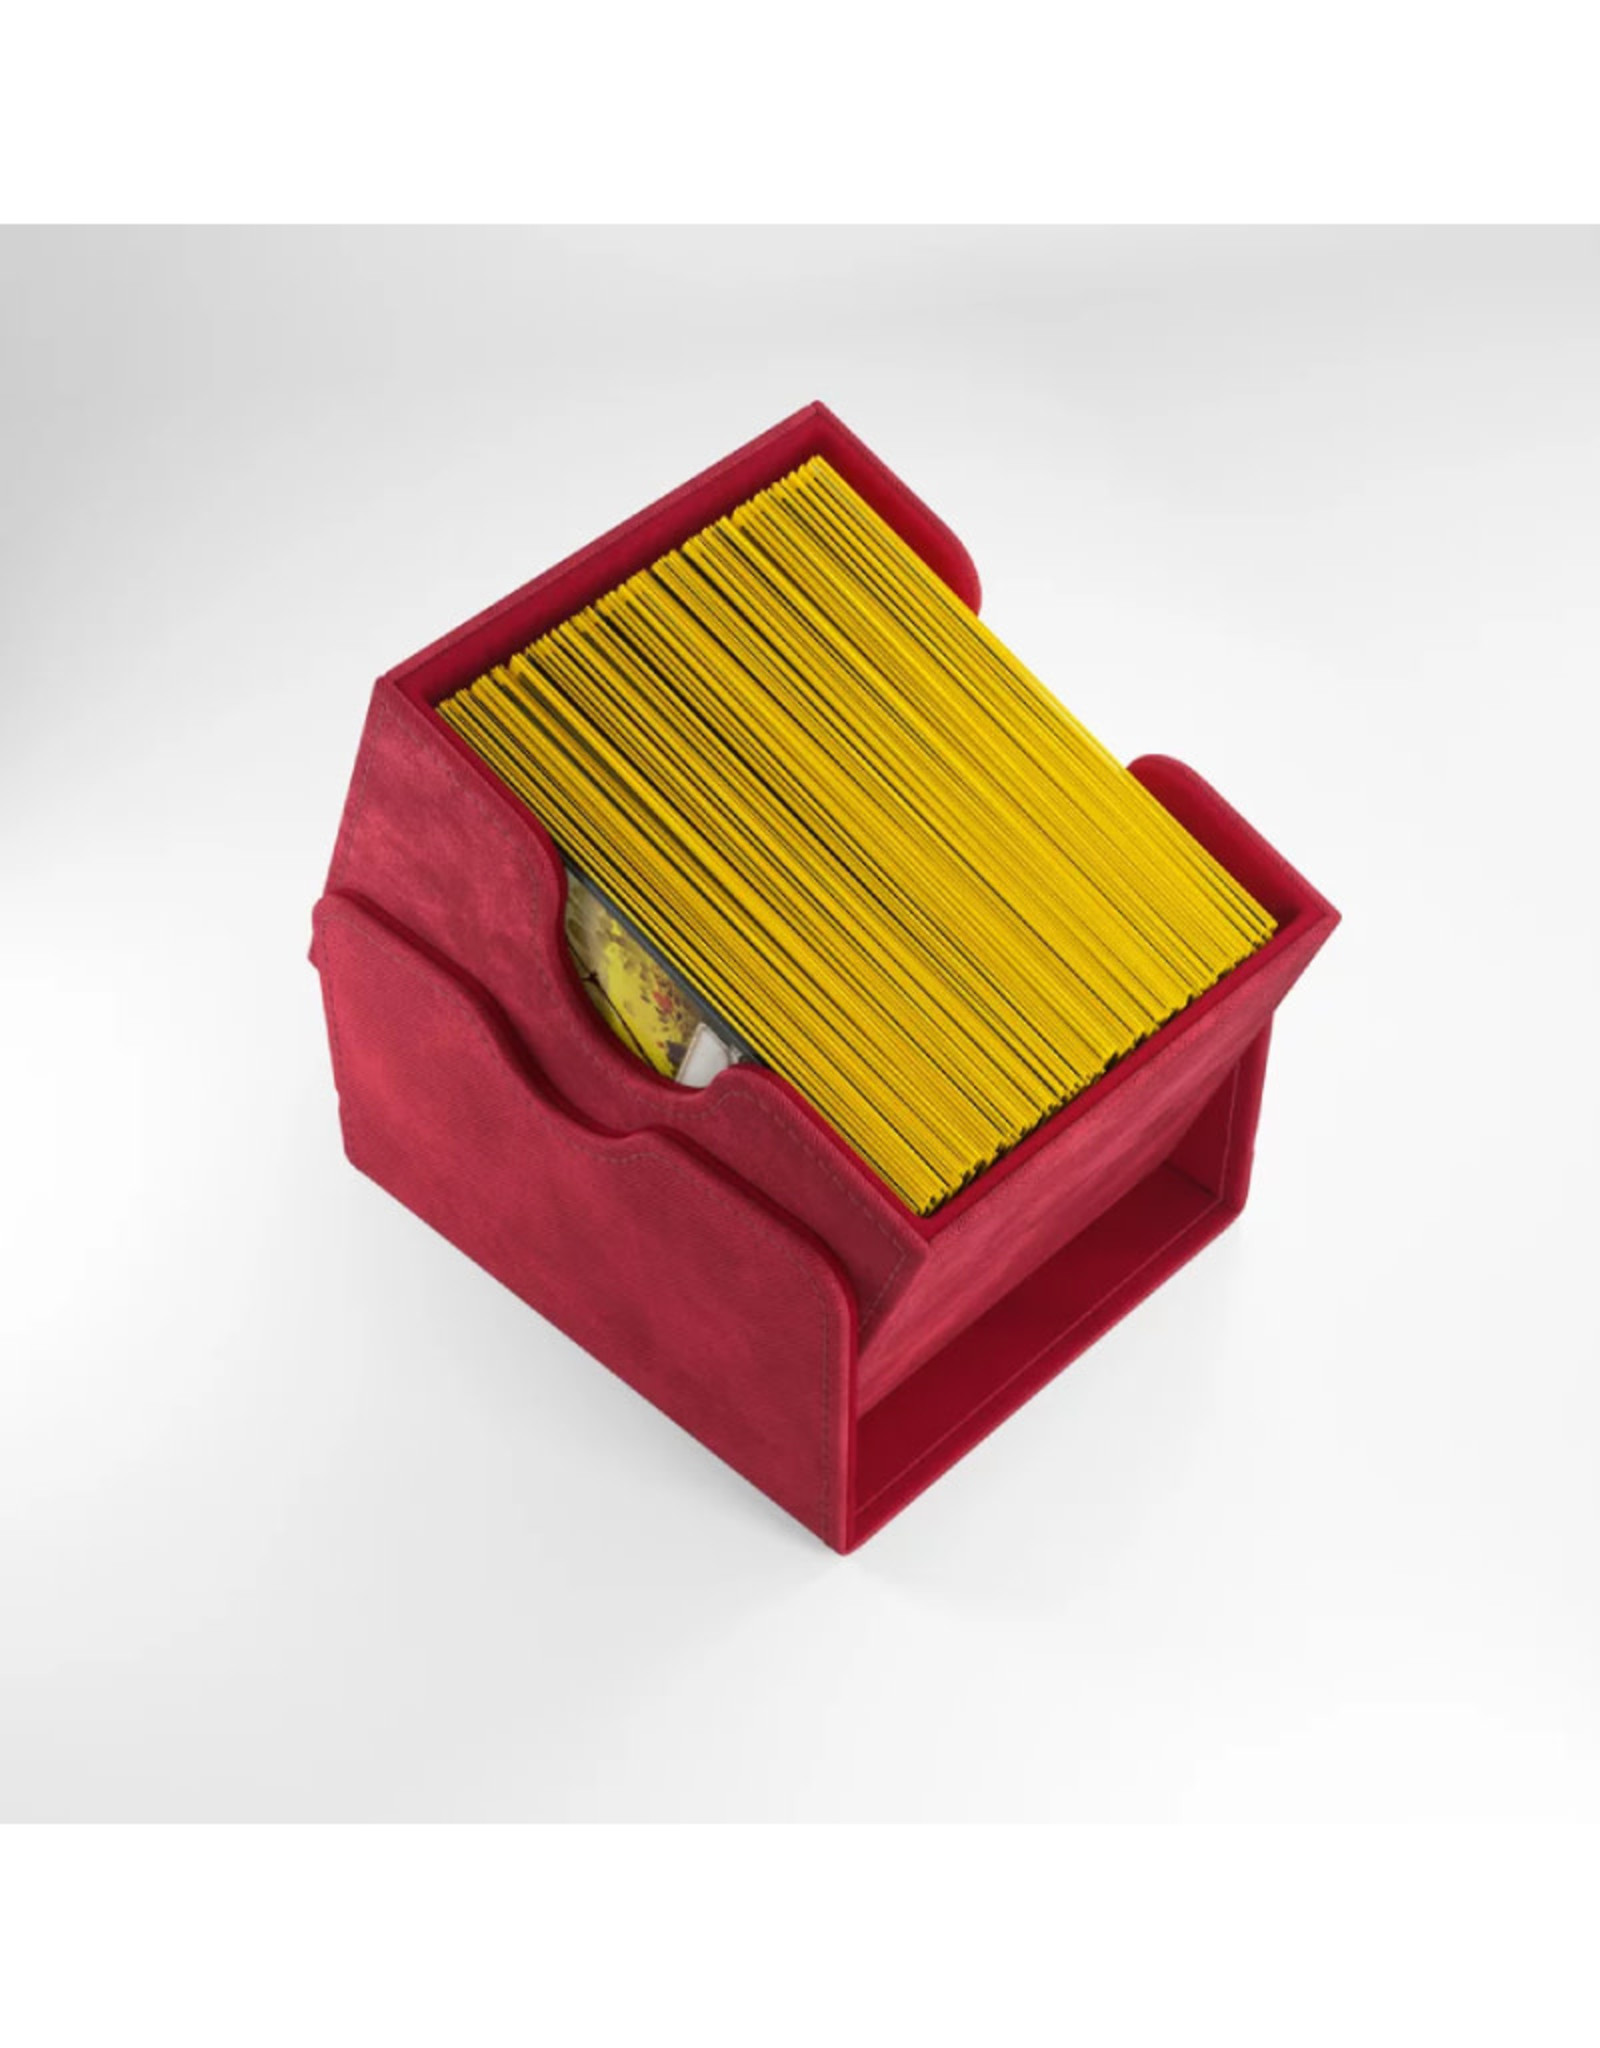 Deck Box: Sidekick XL 100+ Red